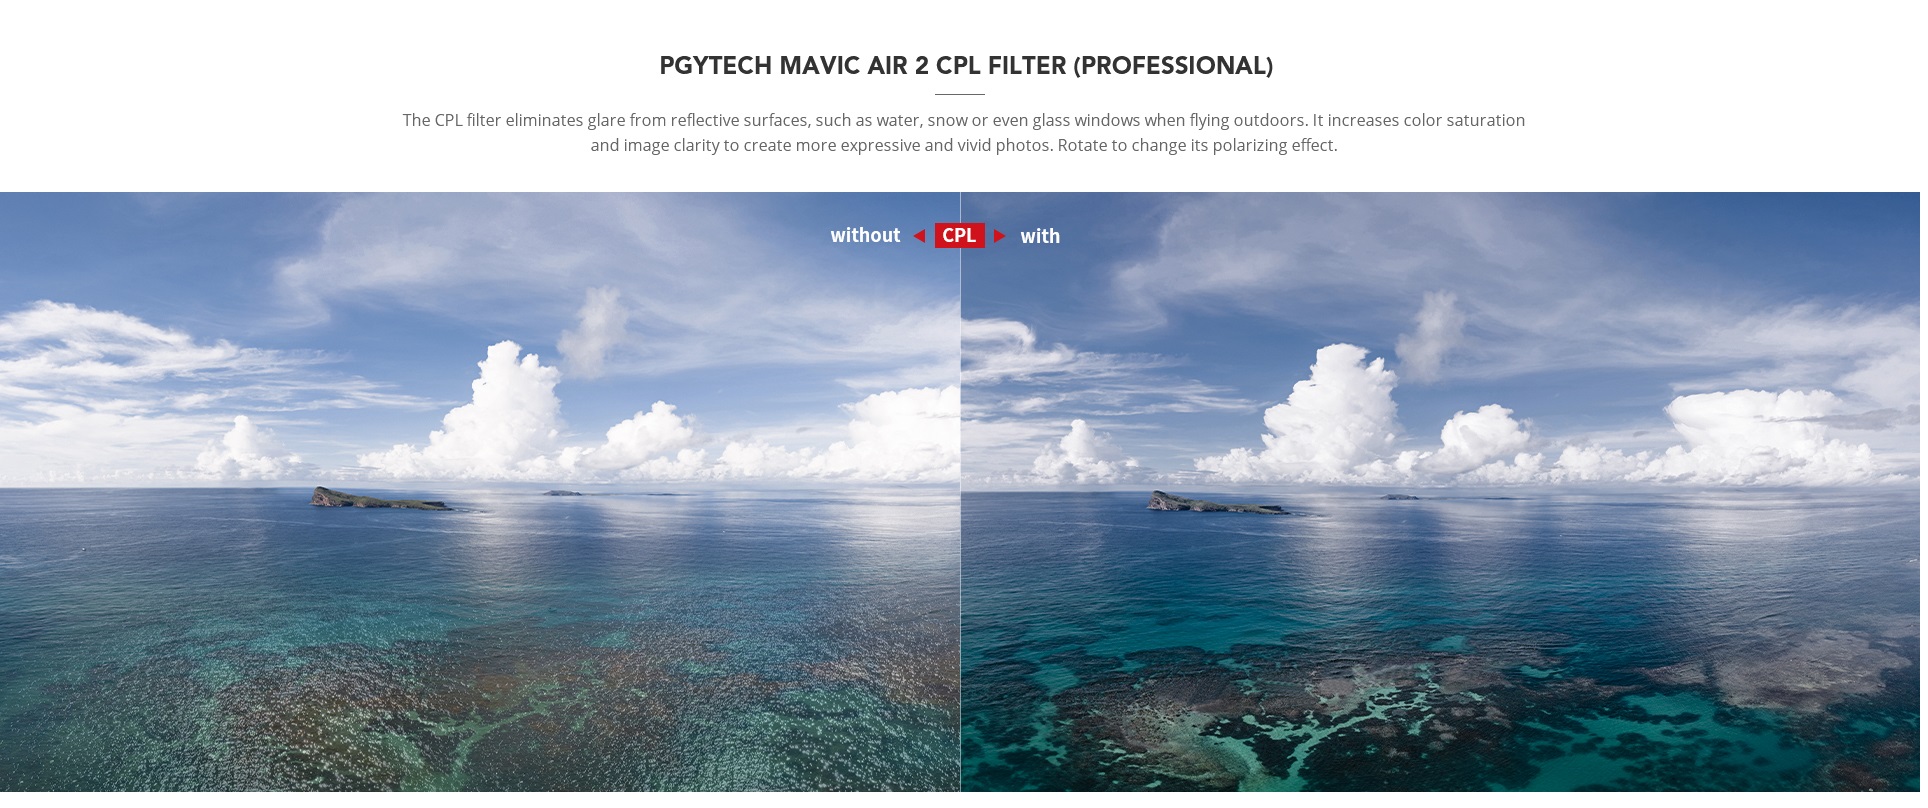 filter-cpl-mavic-air-2-pgytech-professional-cong-dung